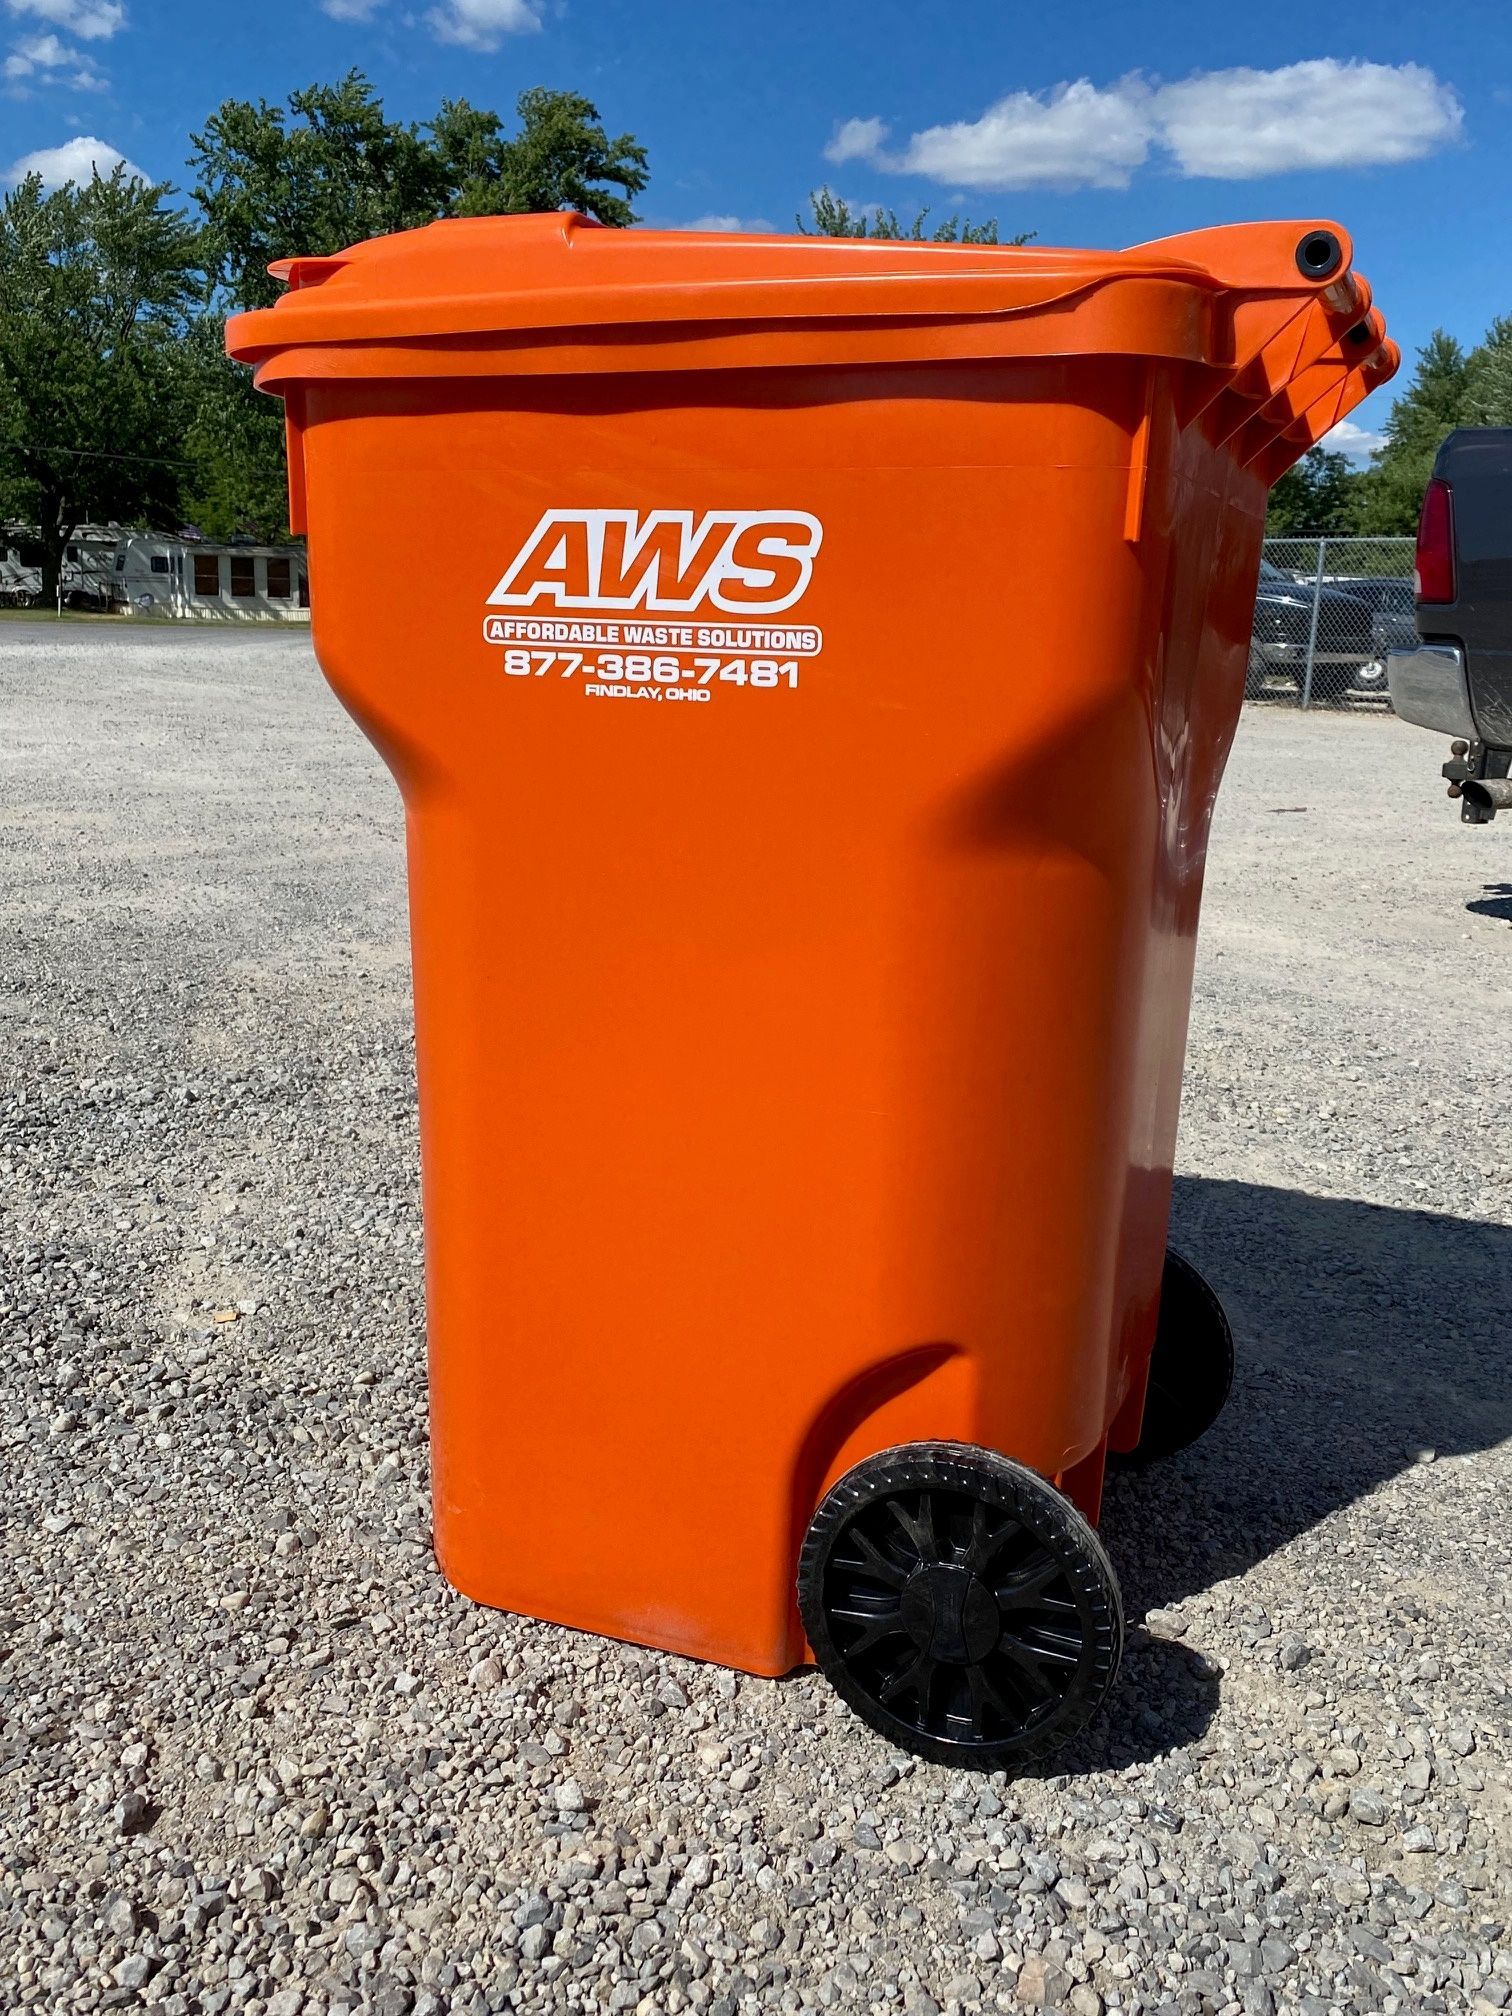 Residential and wheeled trash bin